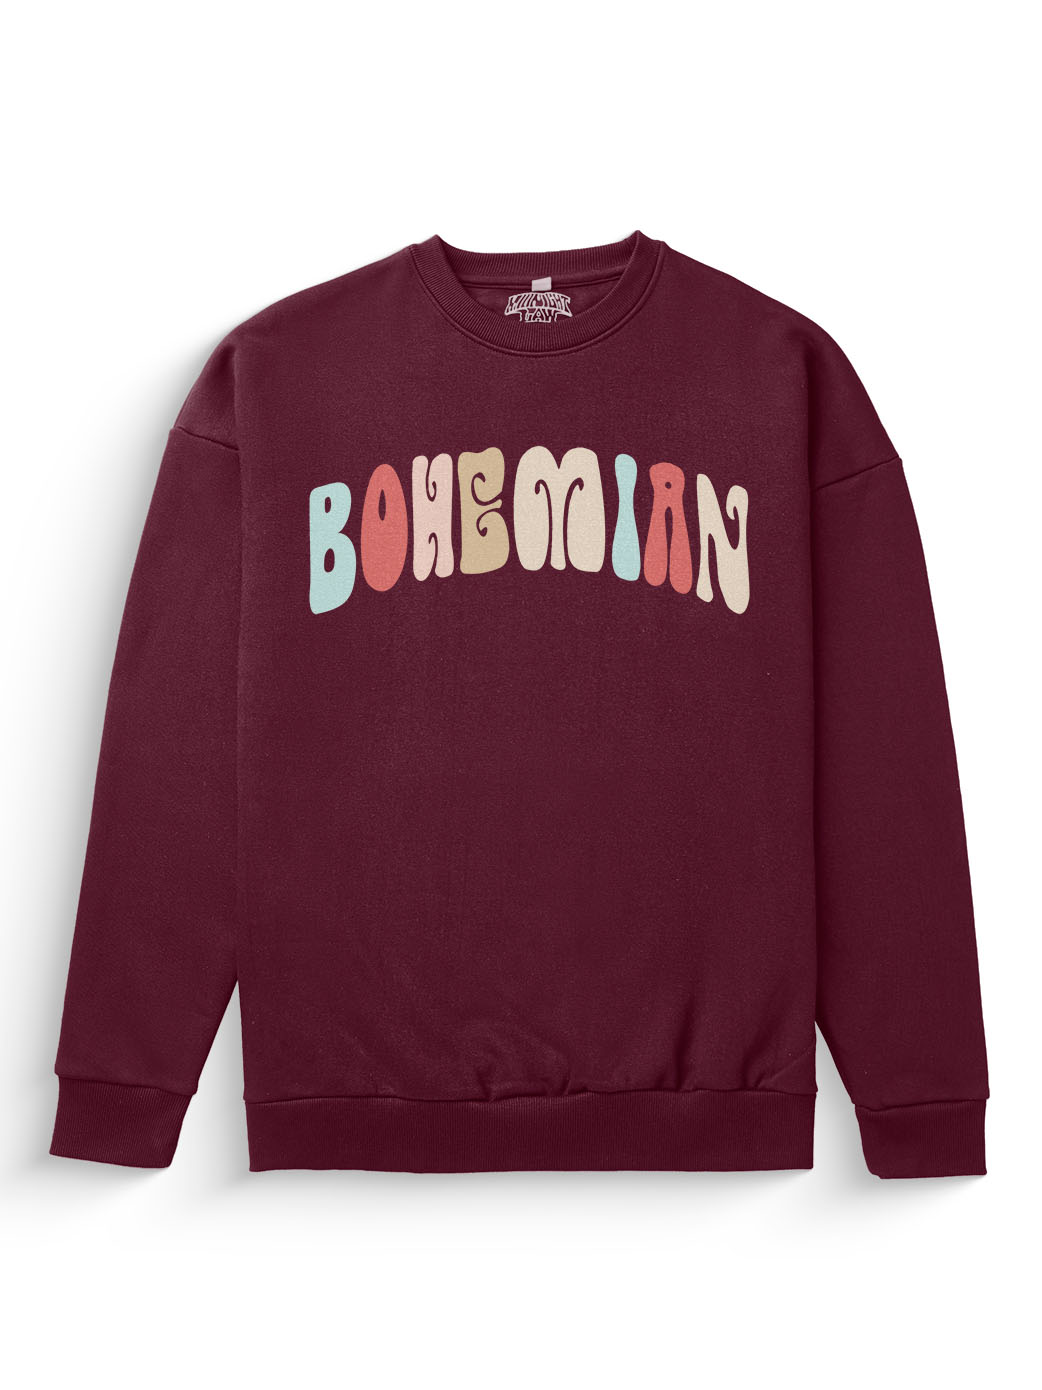 Bohemian Sweatshirt